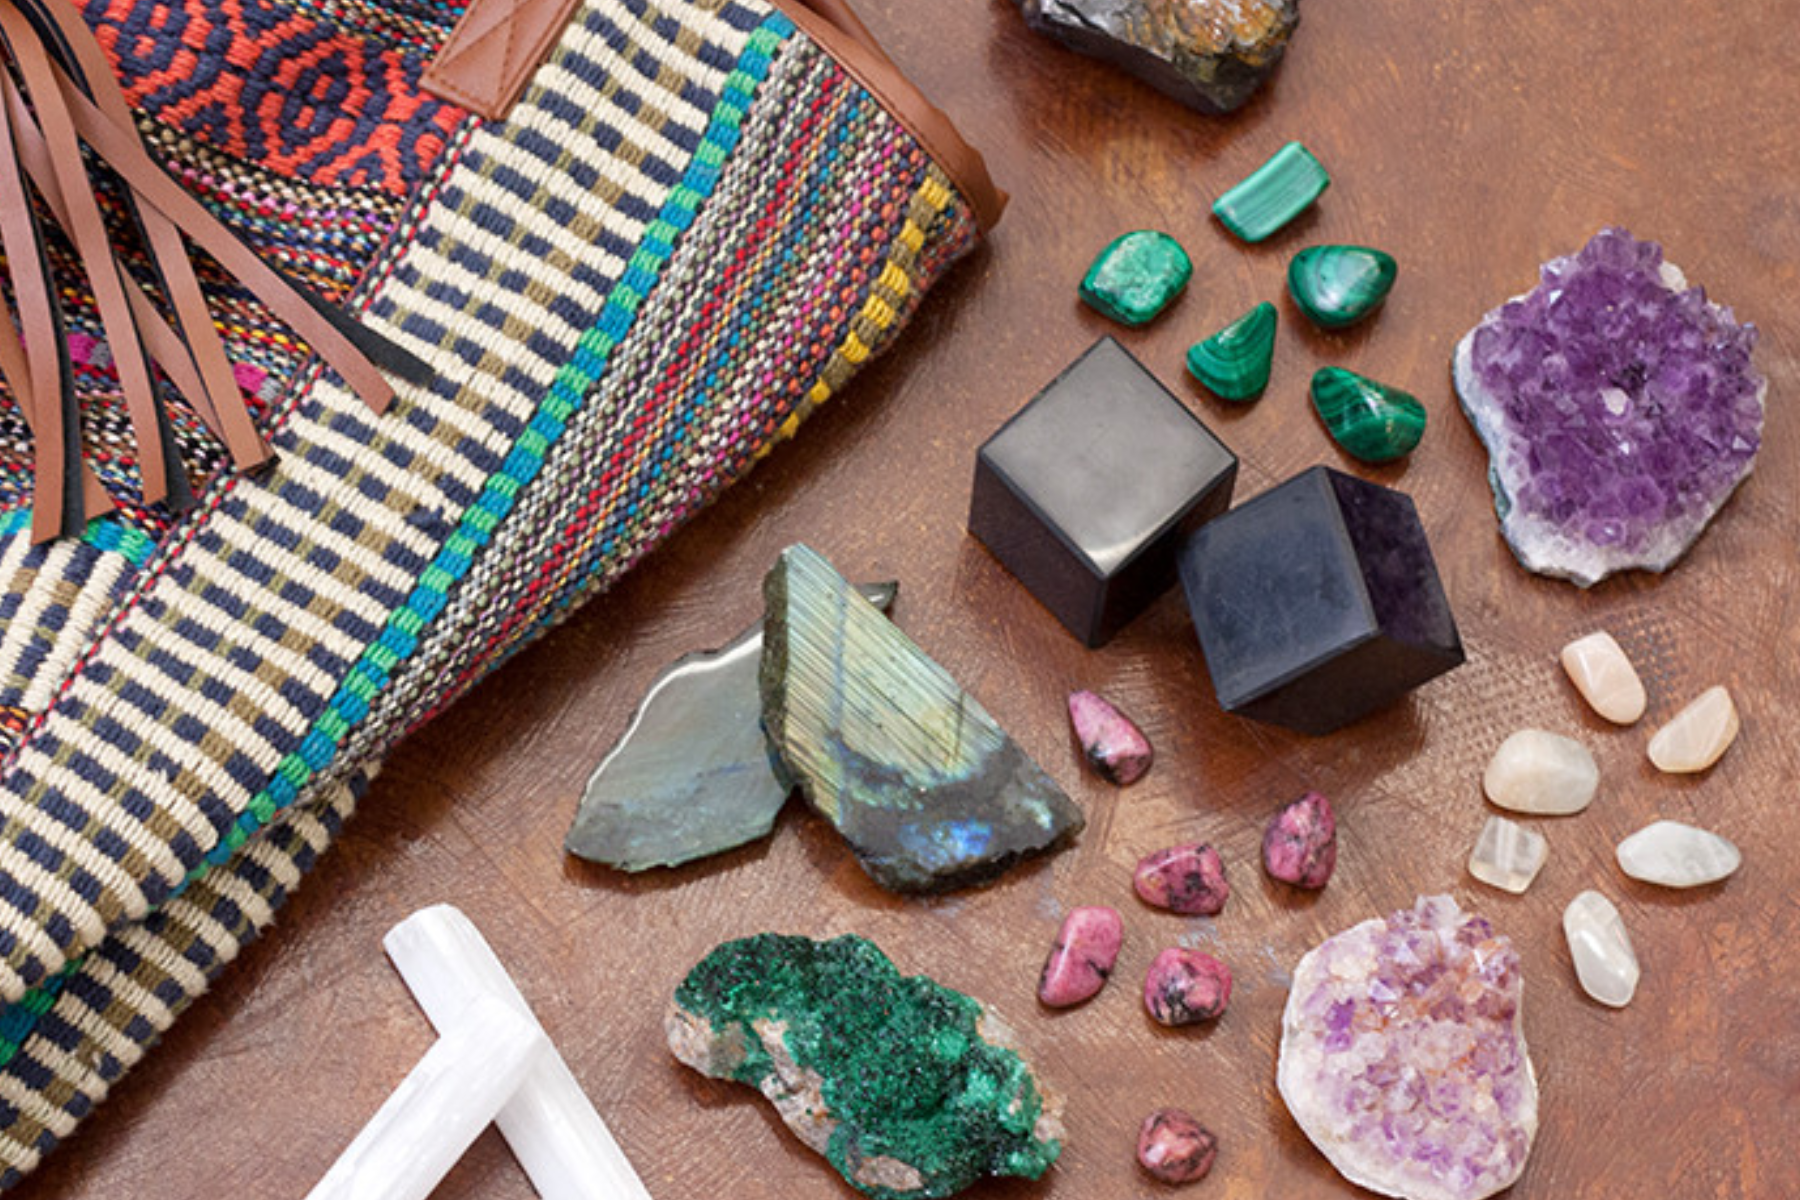 Various sorts of gemstones next to a bag